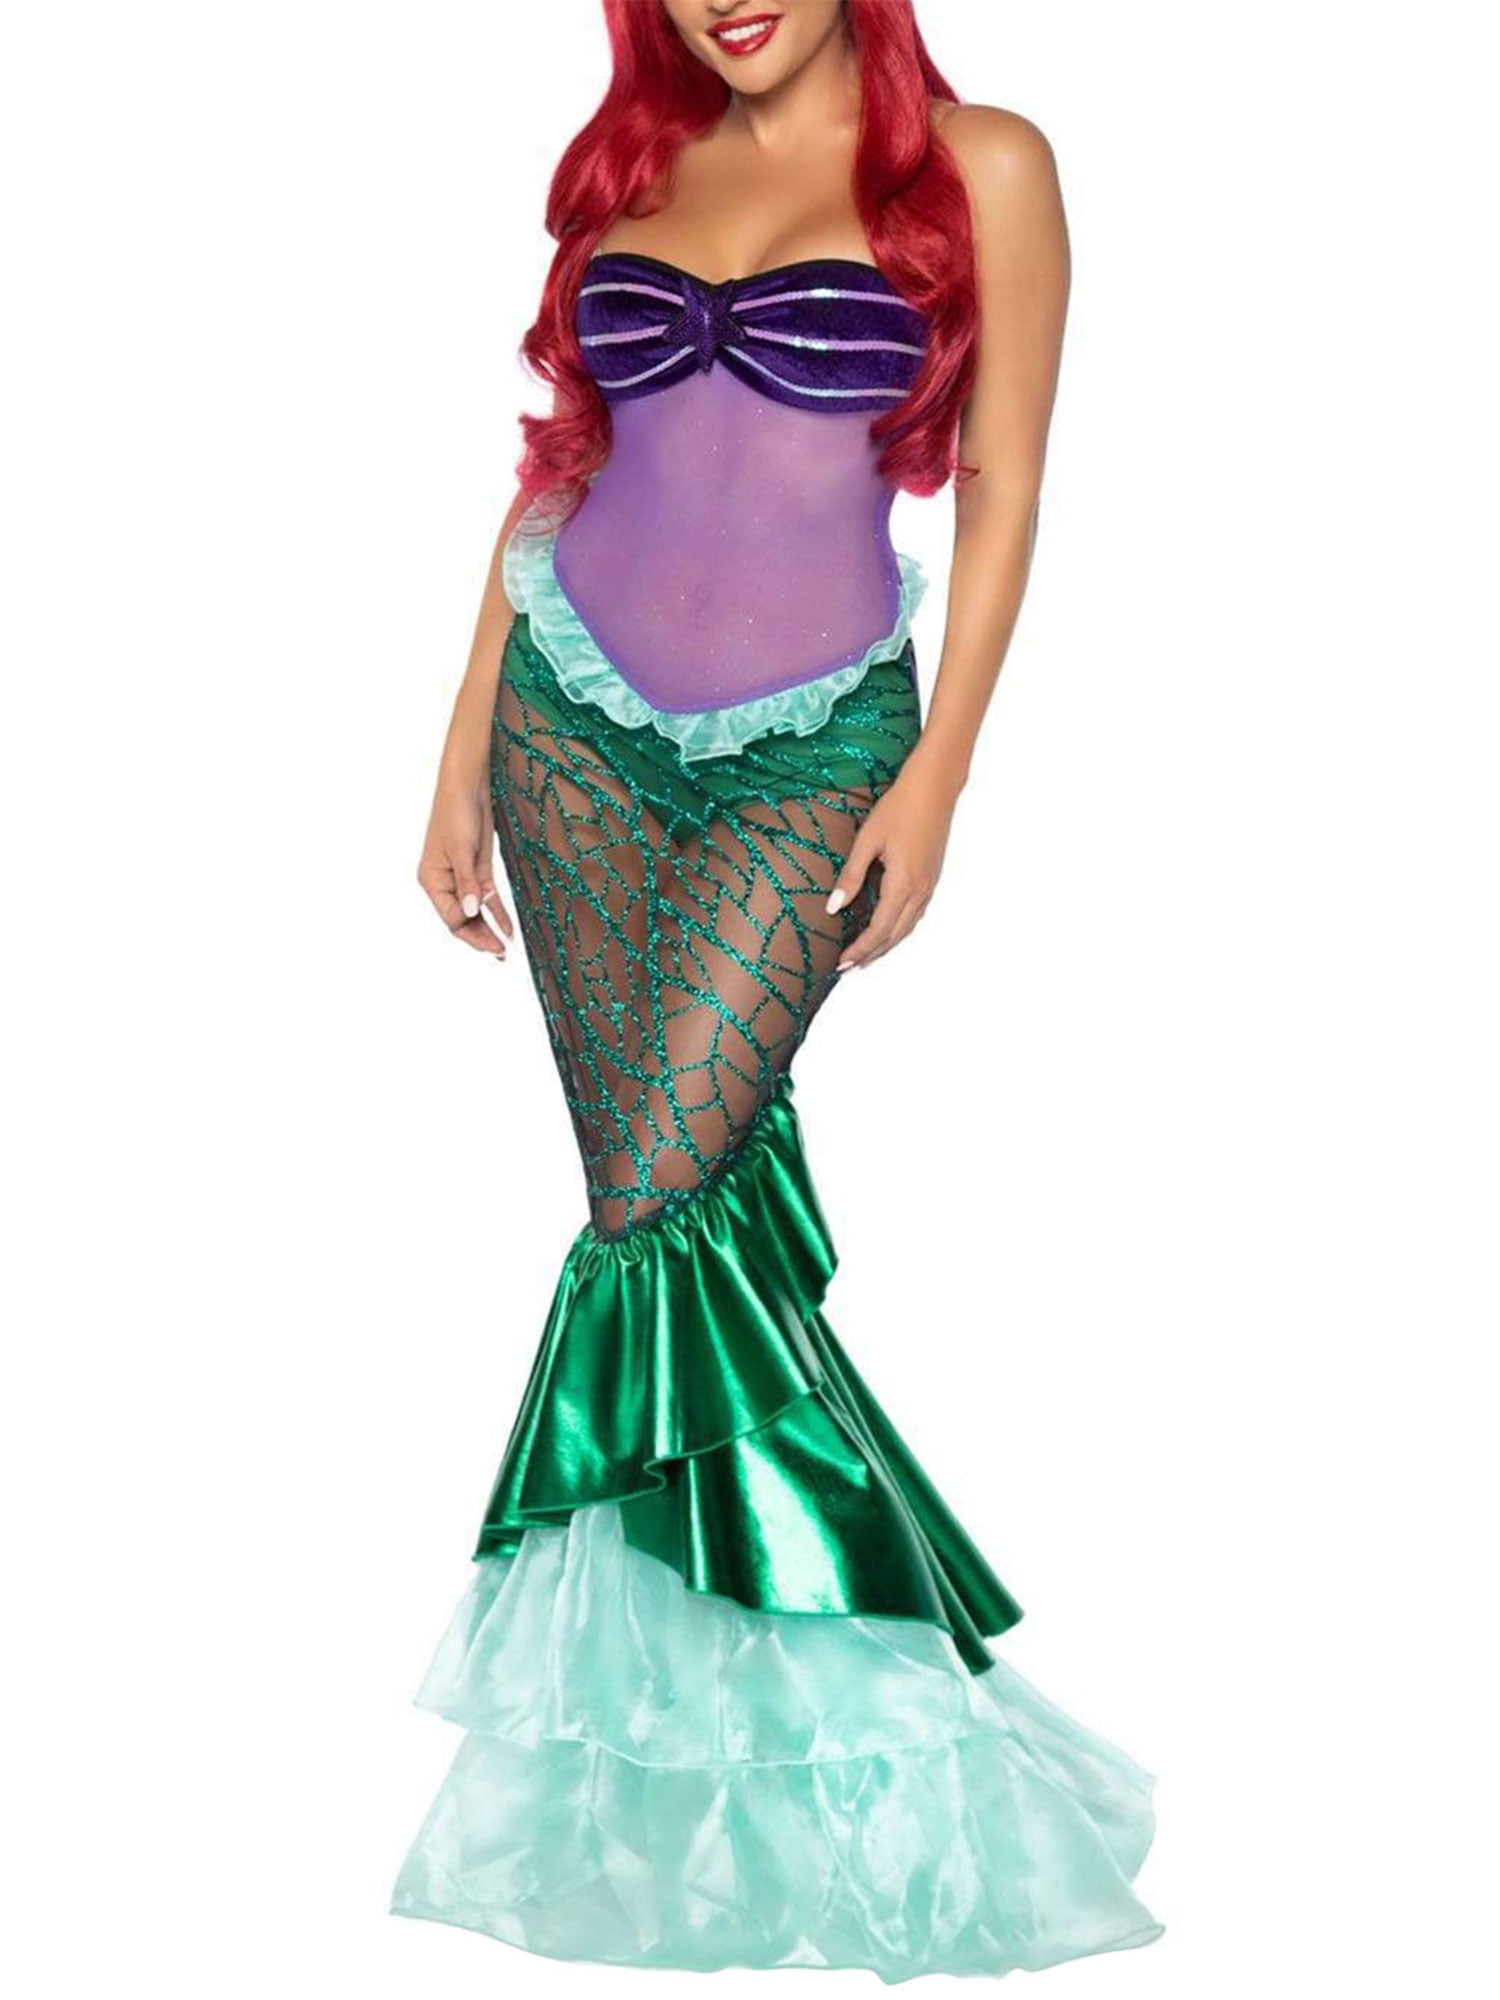 Women's Mermaid Party Halloween Cocktail Dress Long Tail Costume Sexy Ariel Princess Strapless Ruffle Cosplay Fancy Dress Swimwear - Walmart.com